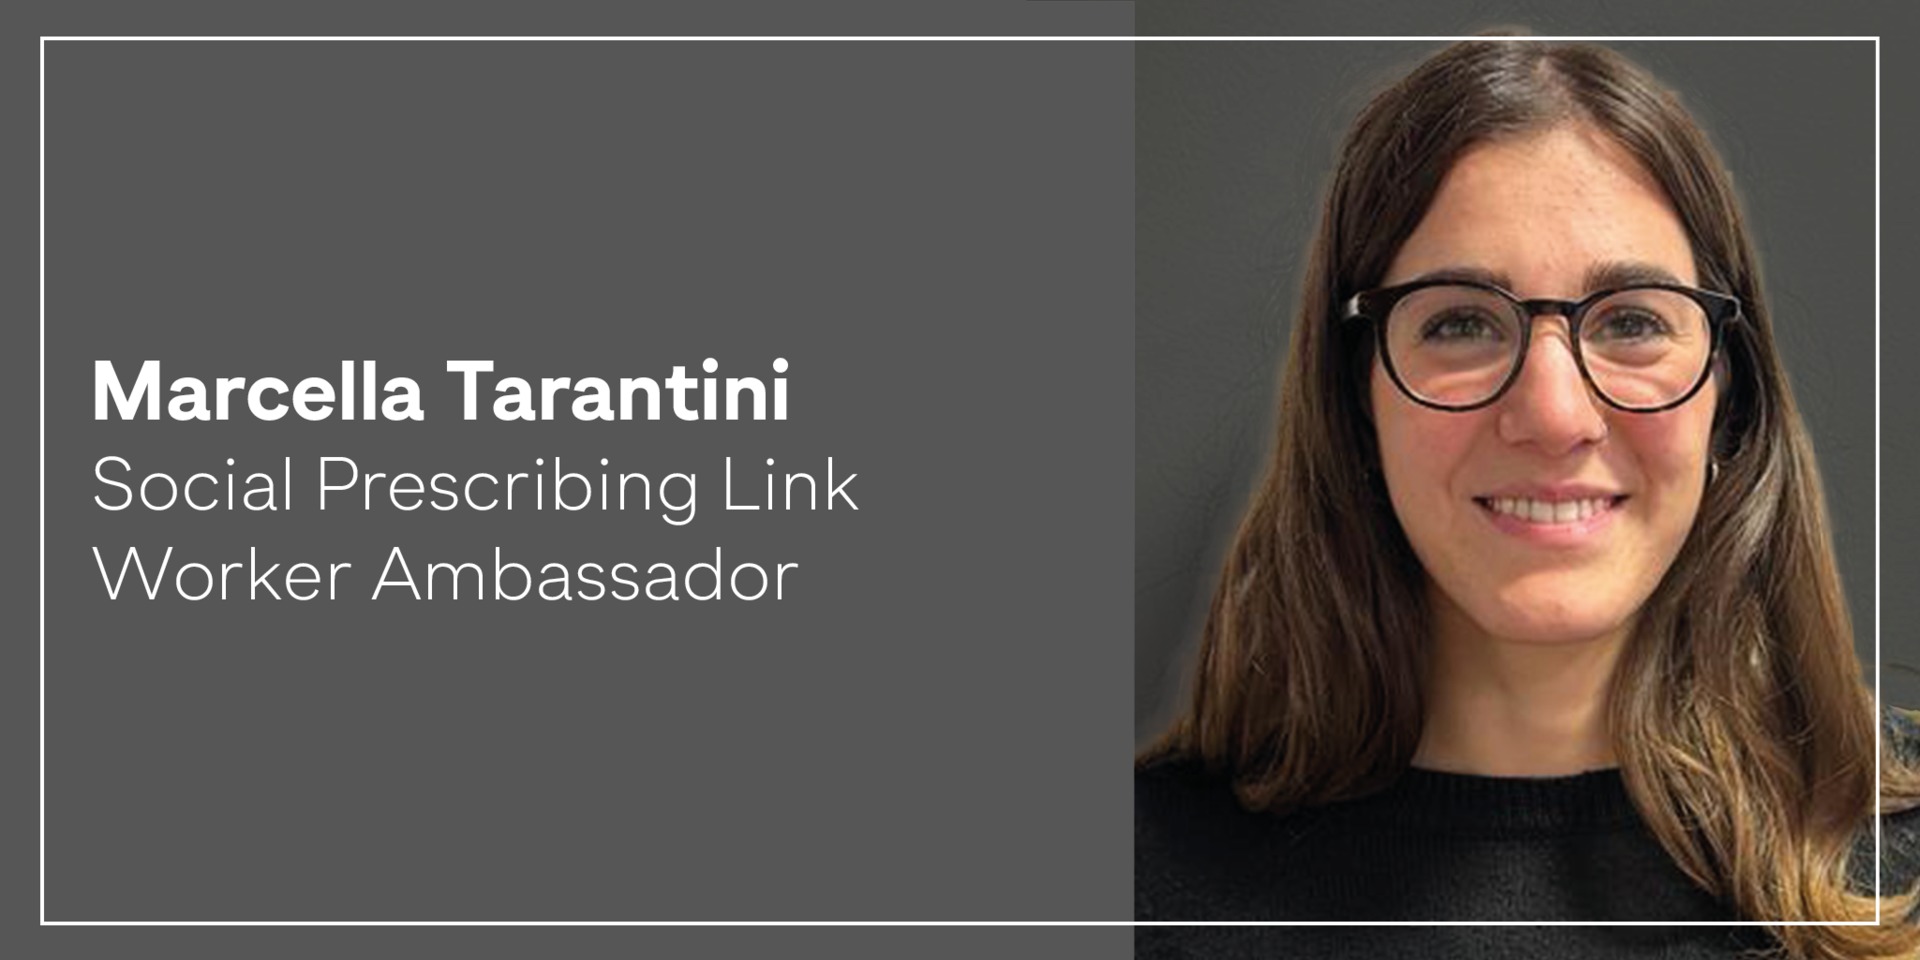 A photo of Marcella Tarantini - Social Prescribing Link Worker Ambassador